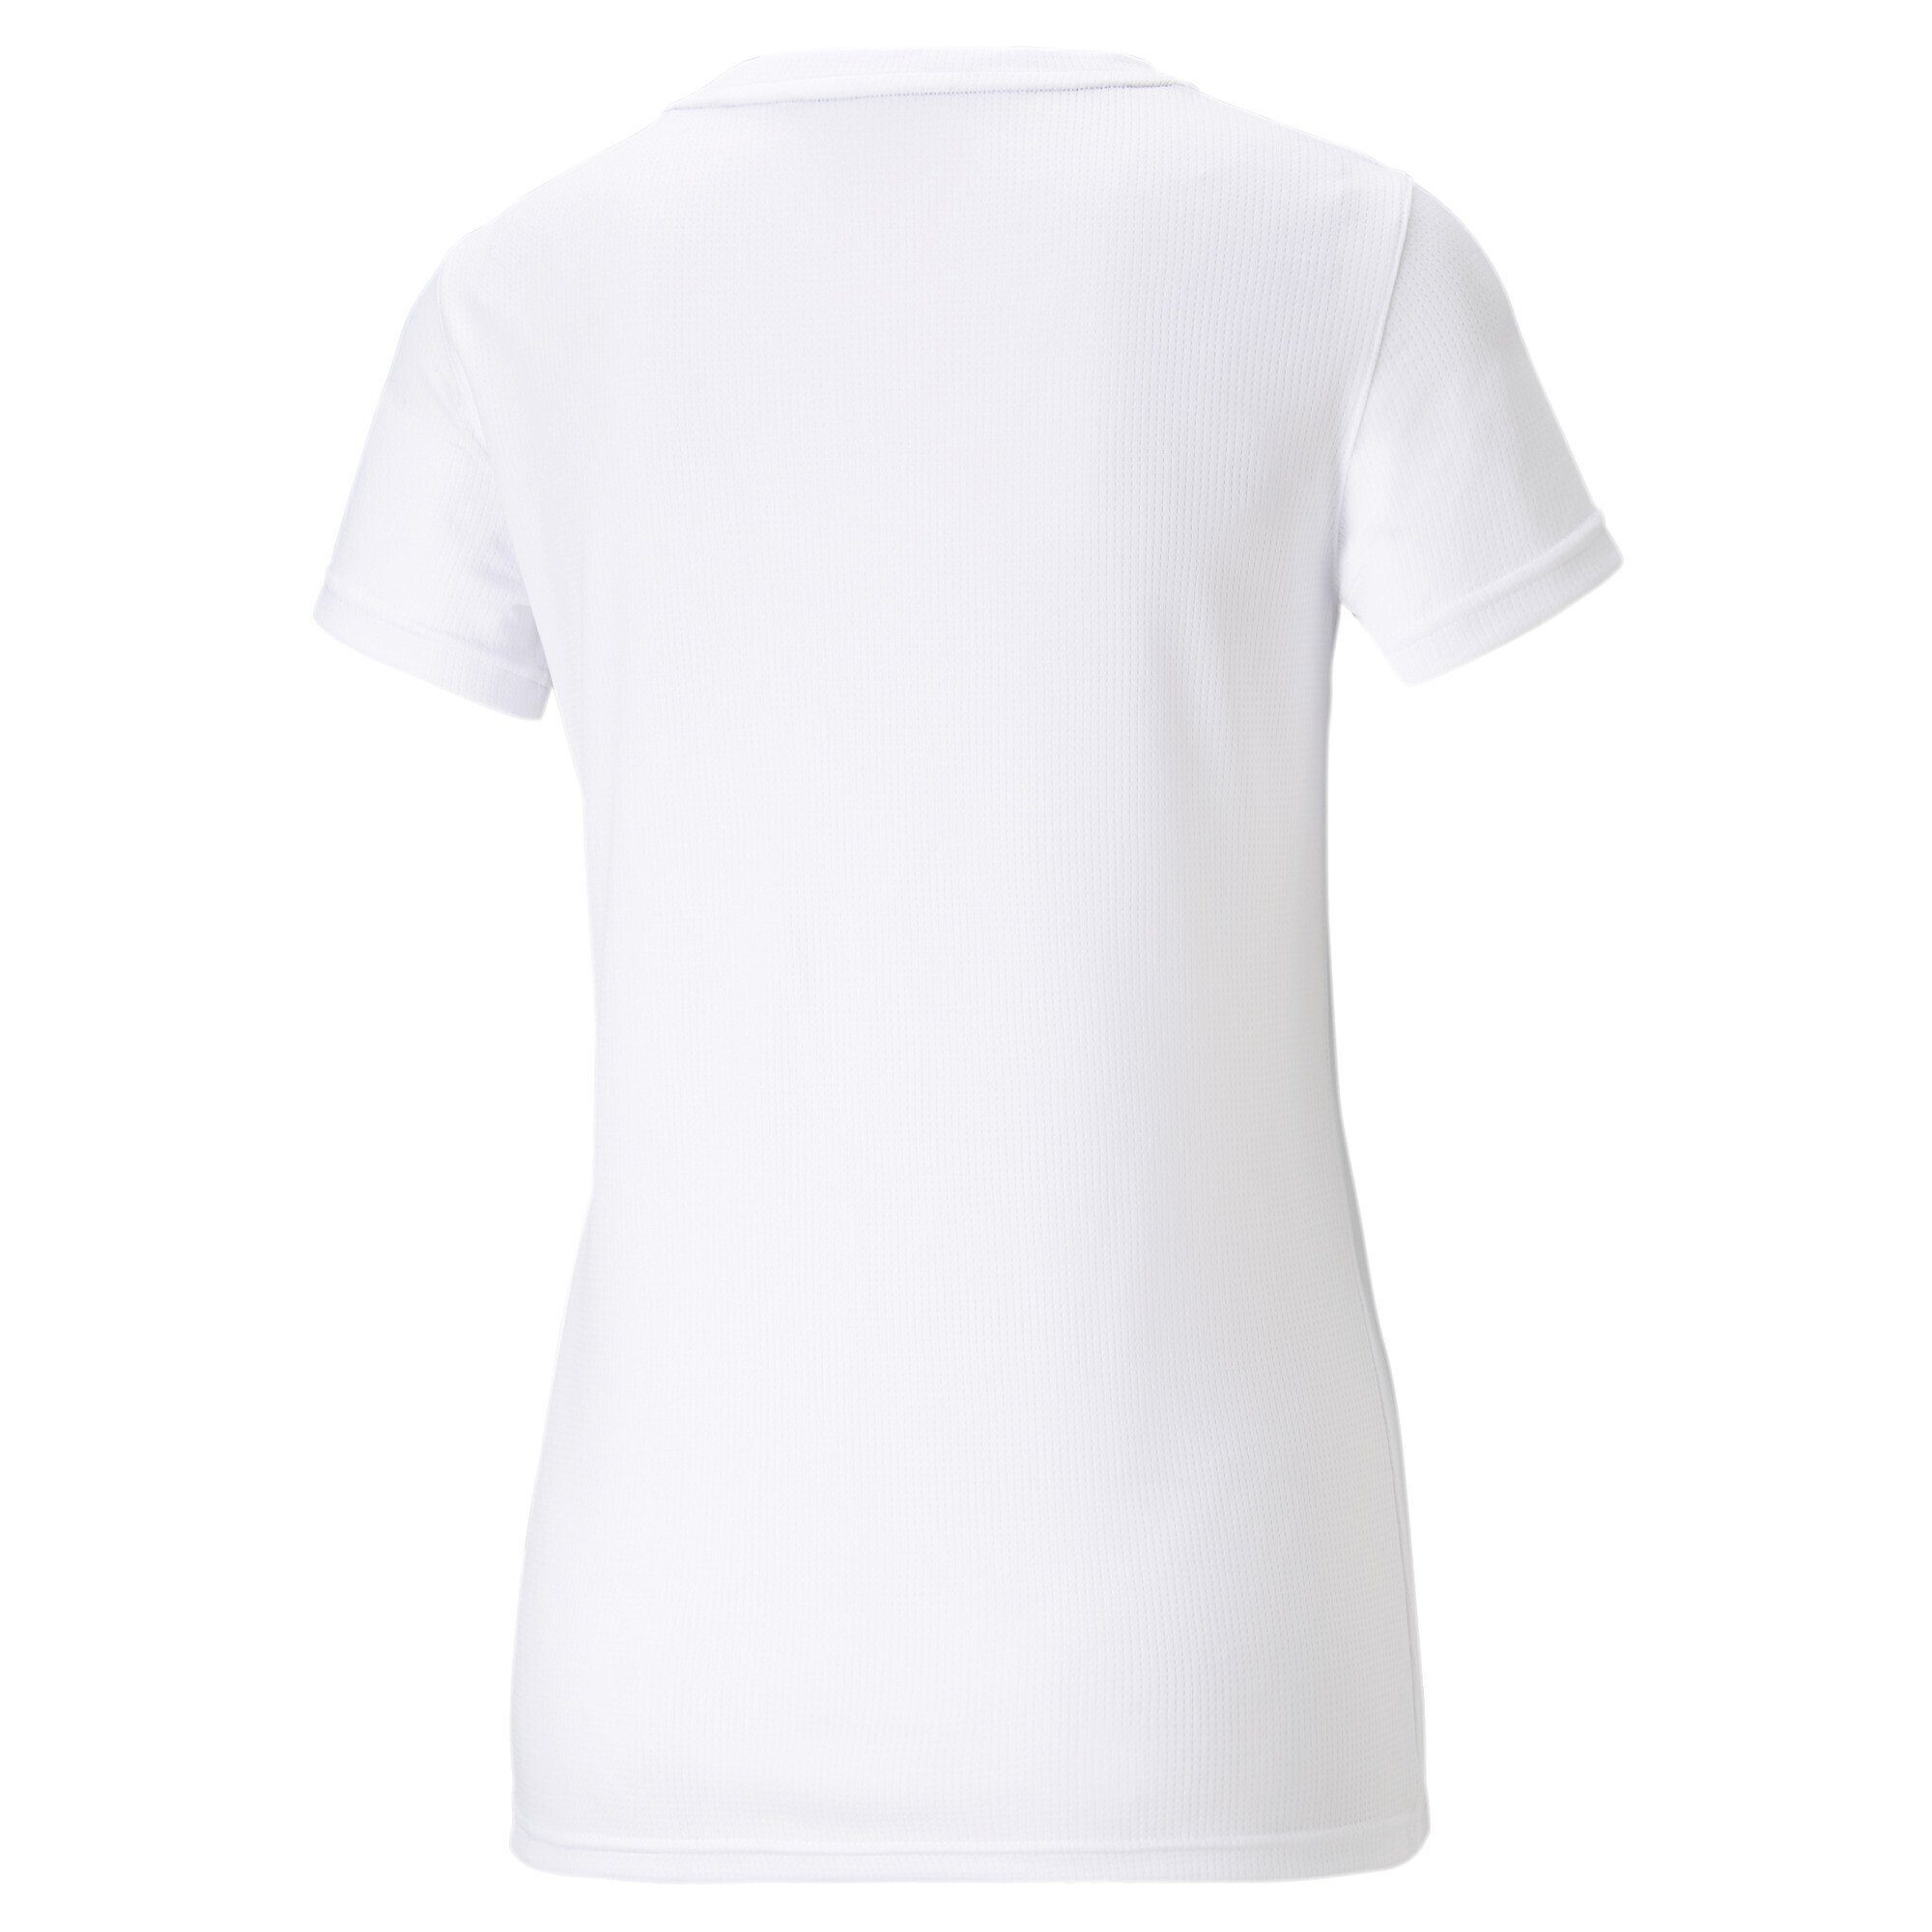 Trainingsshirt Damen White Trainings-T-Shirt Performance PUMA